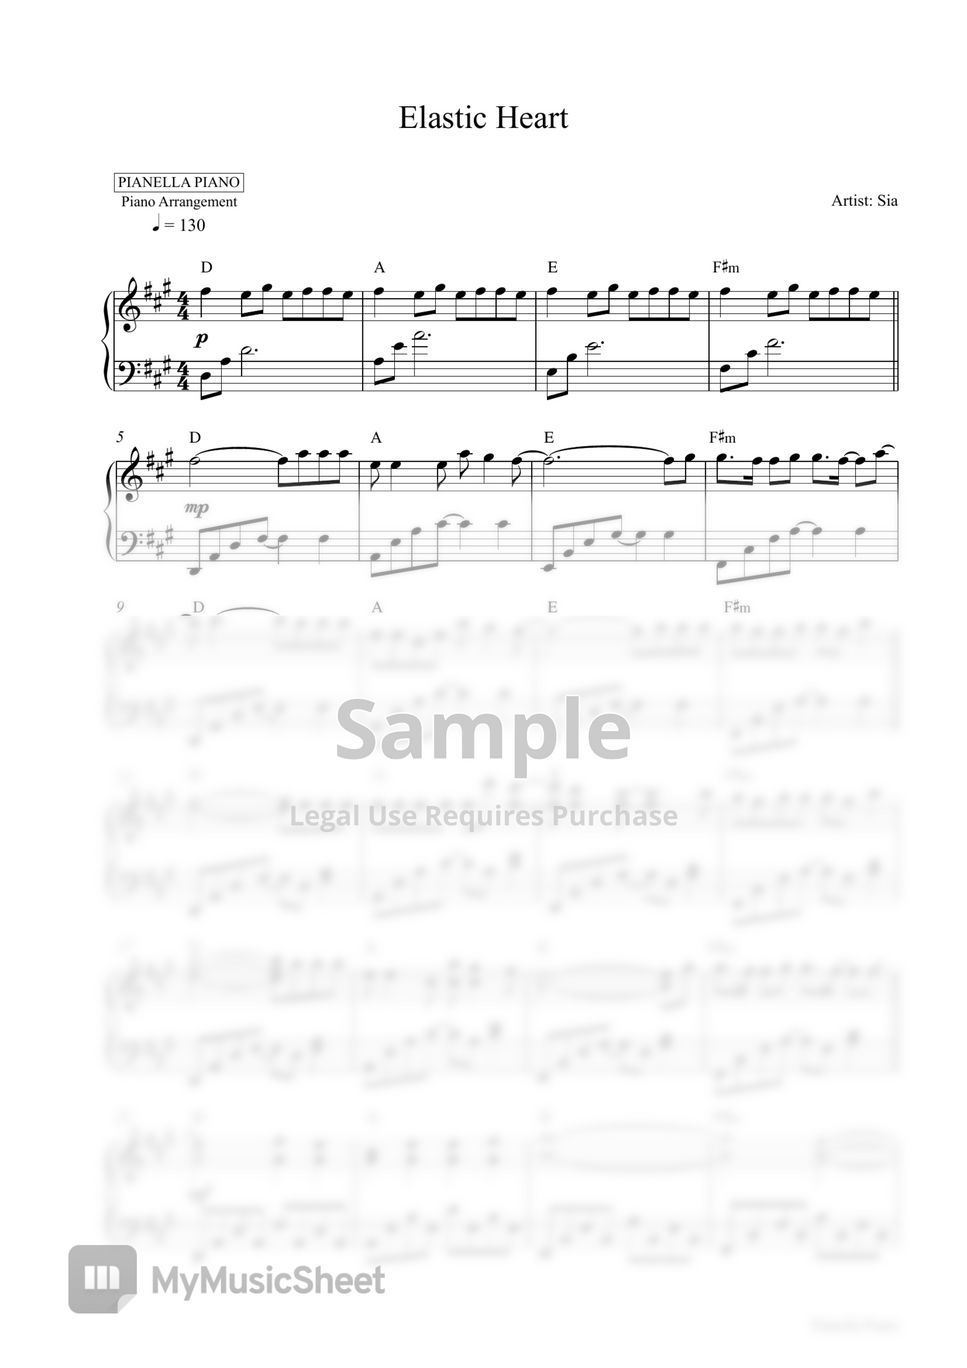 Sia - Elastic Heart (Piano Sheet) by Pianella Piano